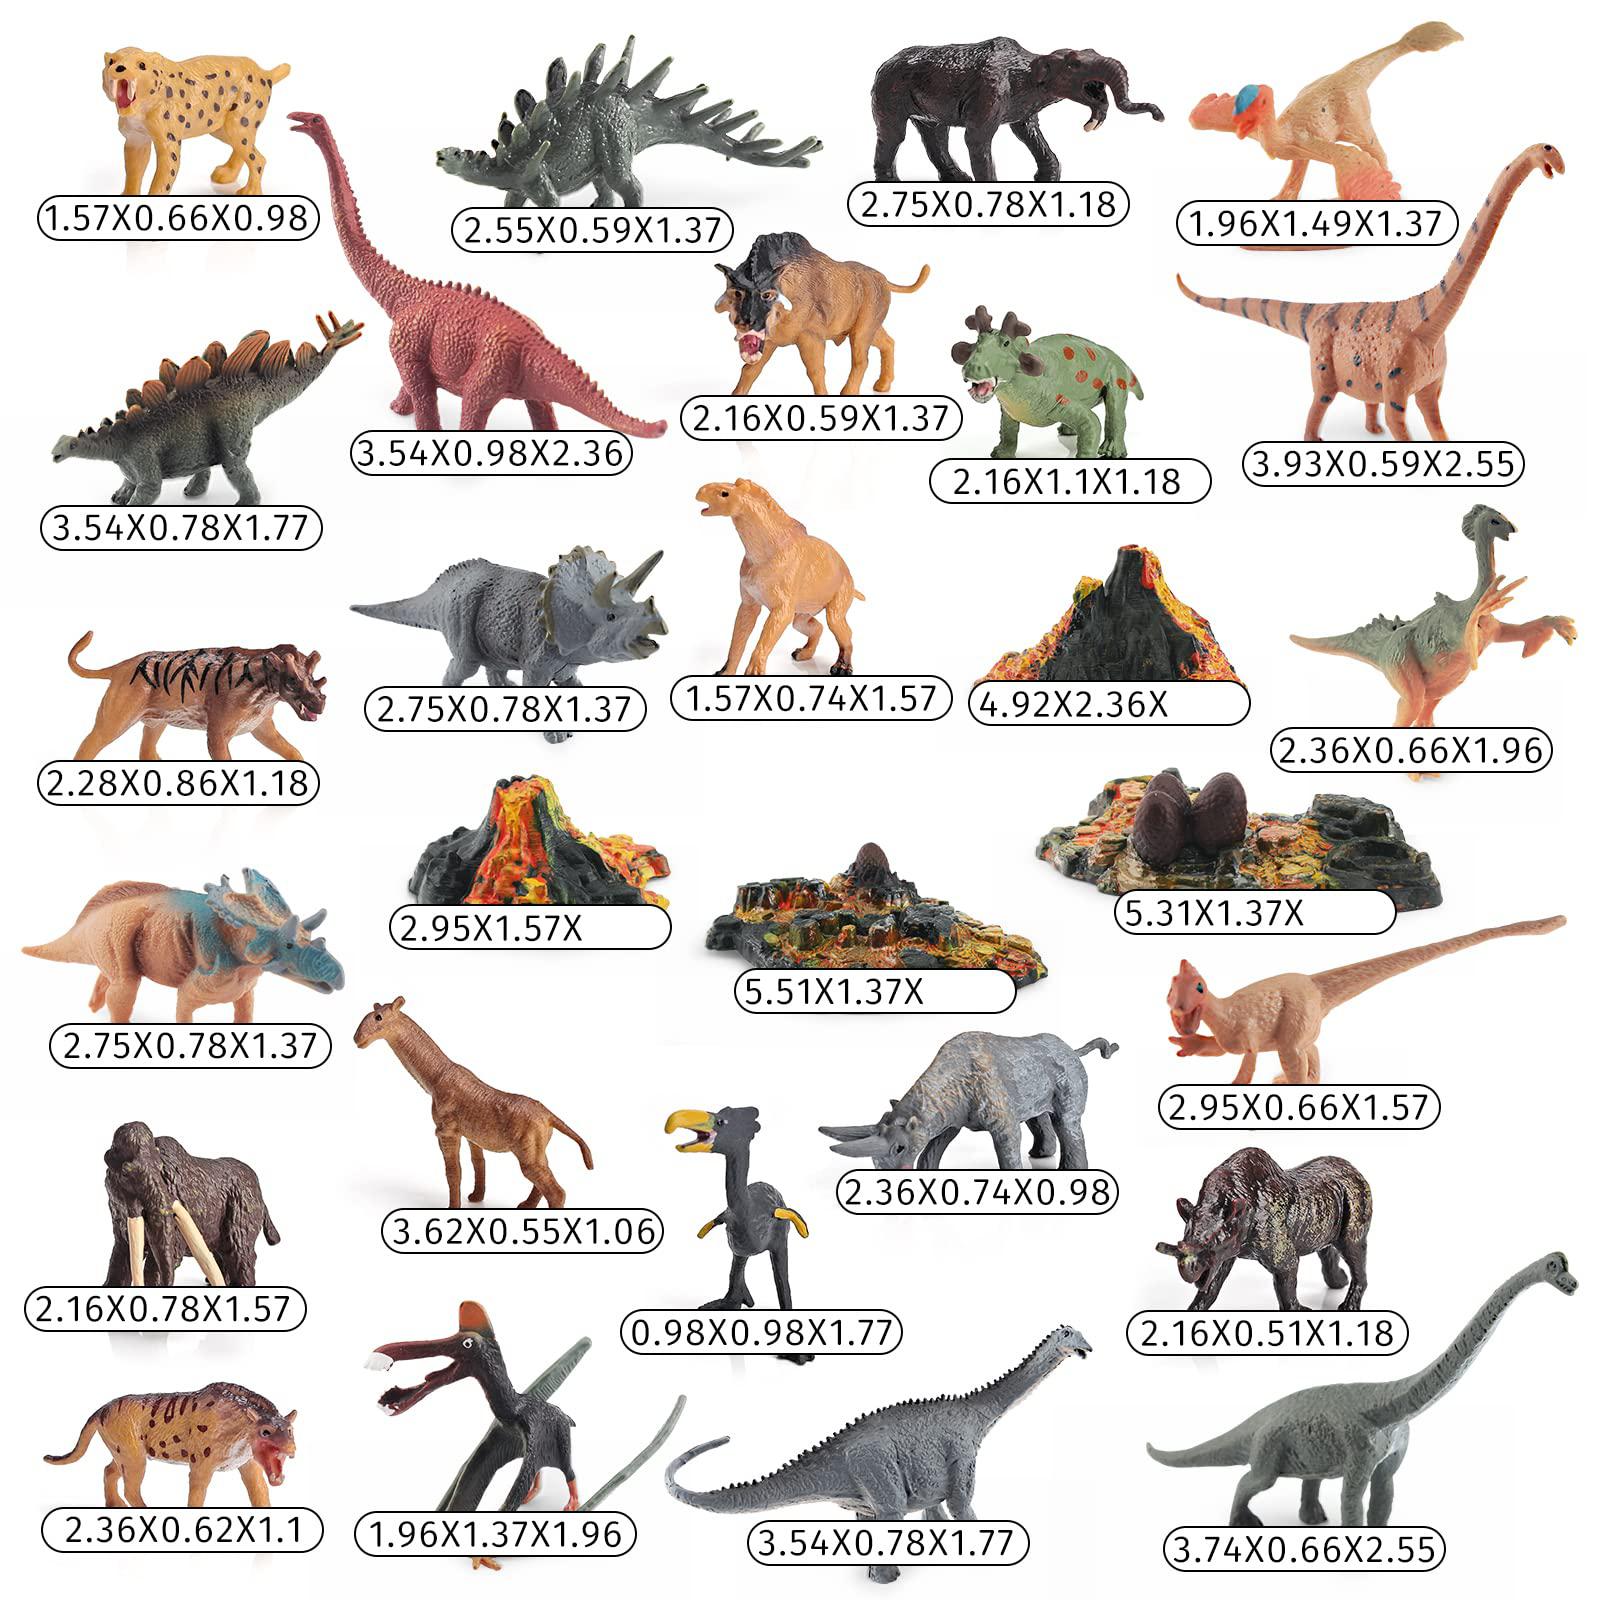 bretoyin 28pcs dinosaur volcano playset: mini dinosaurs, caveman toys, realistic figures, cake topper, educational for toddle